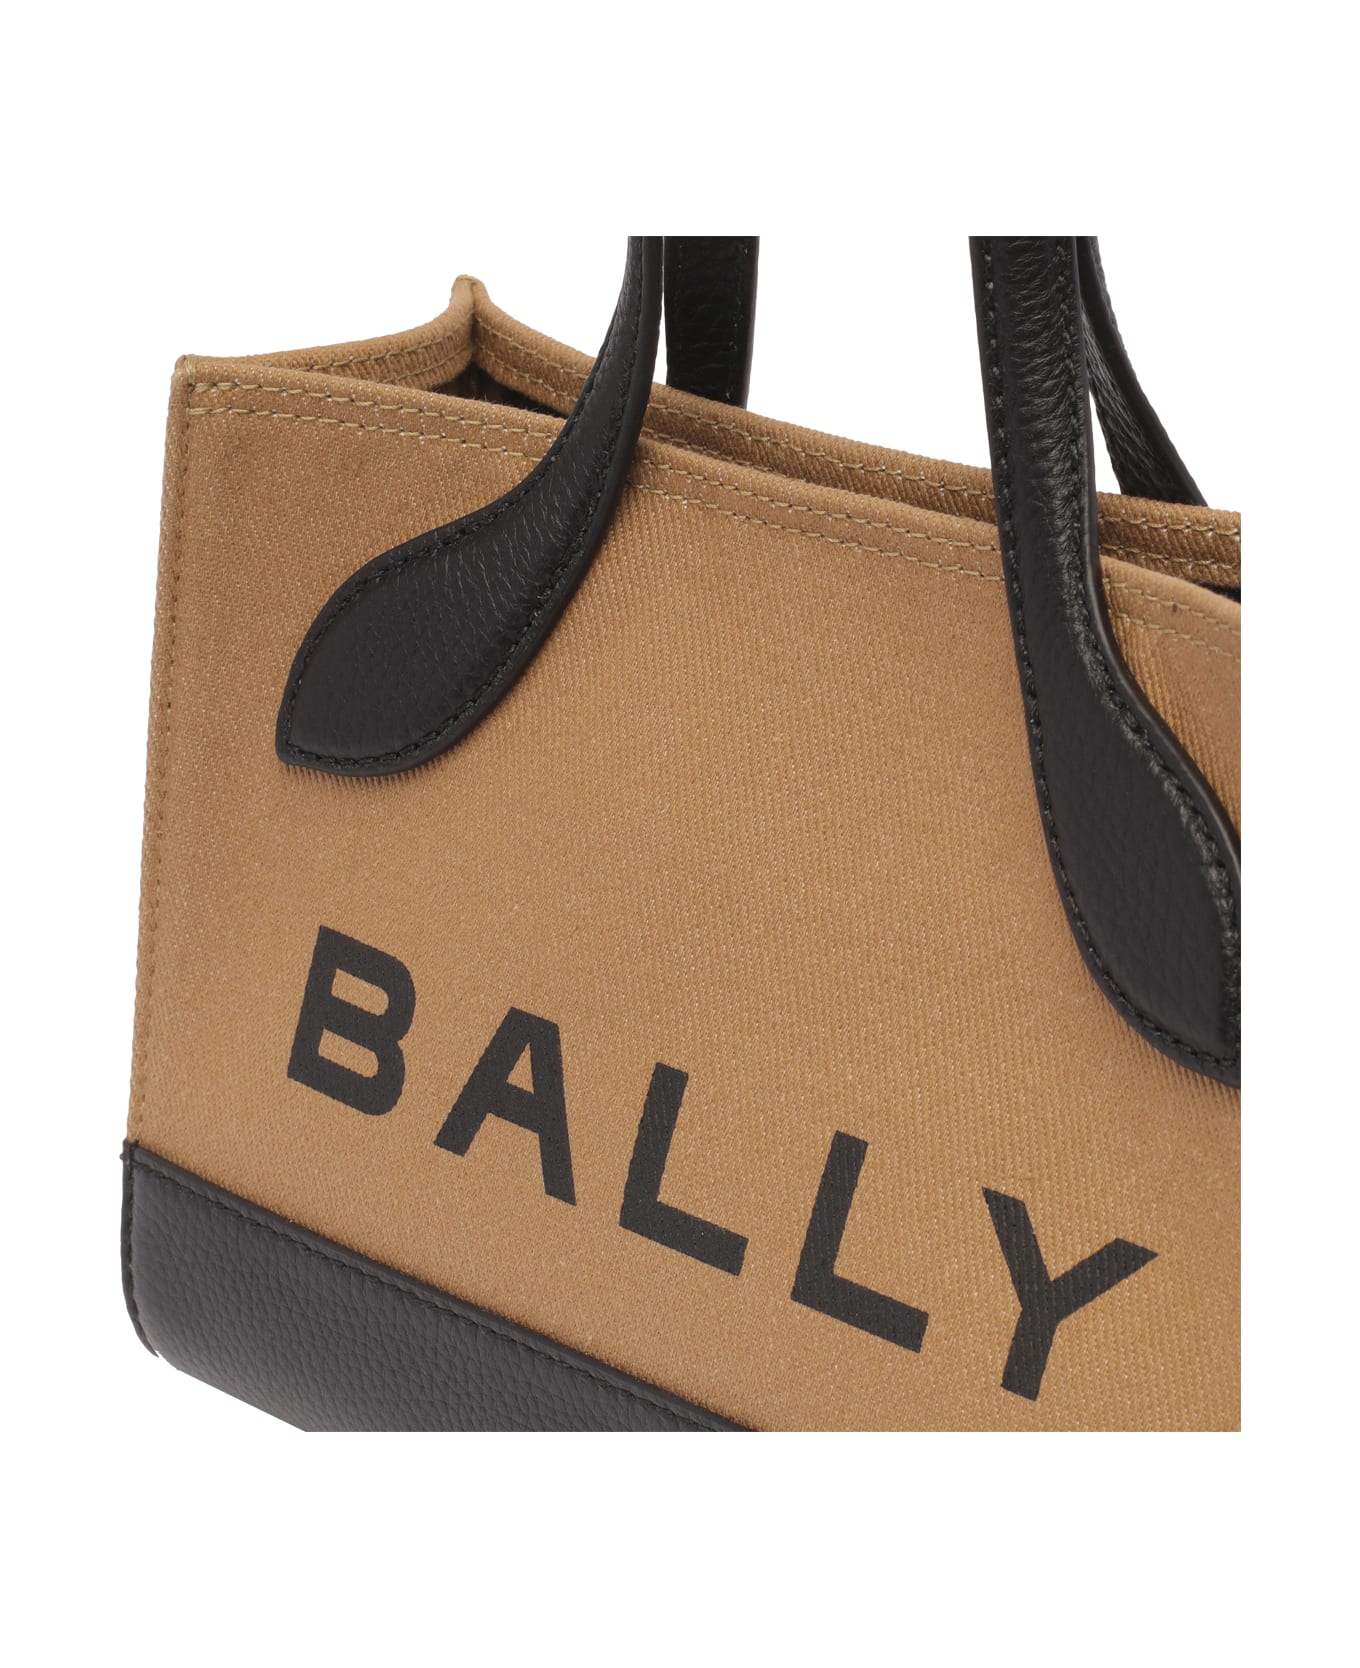 Bally Logo Tote Bag - Sand/black+oro